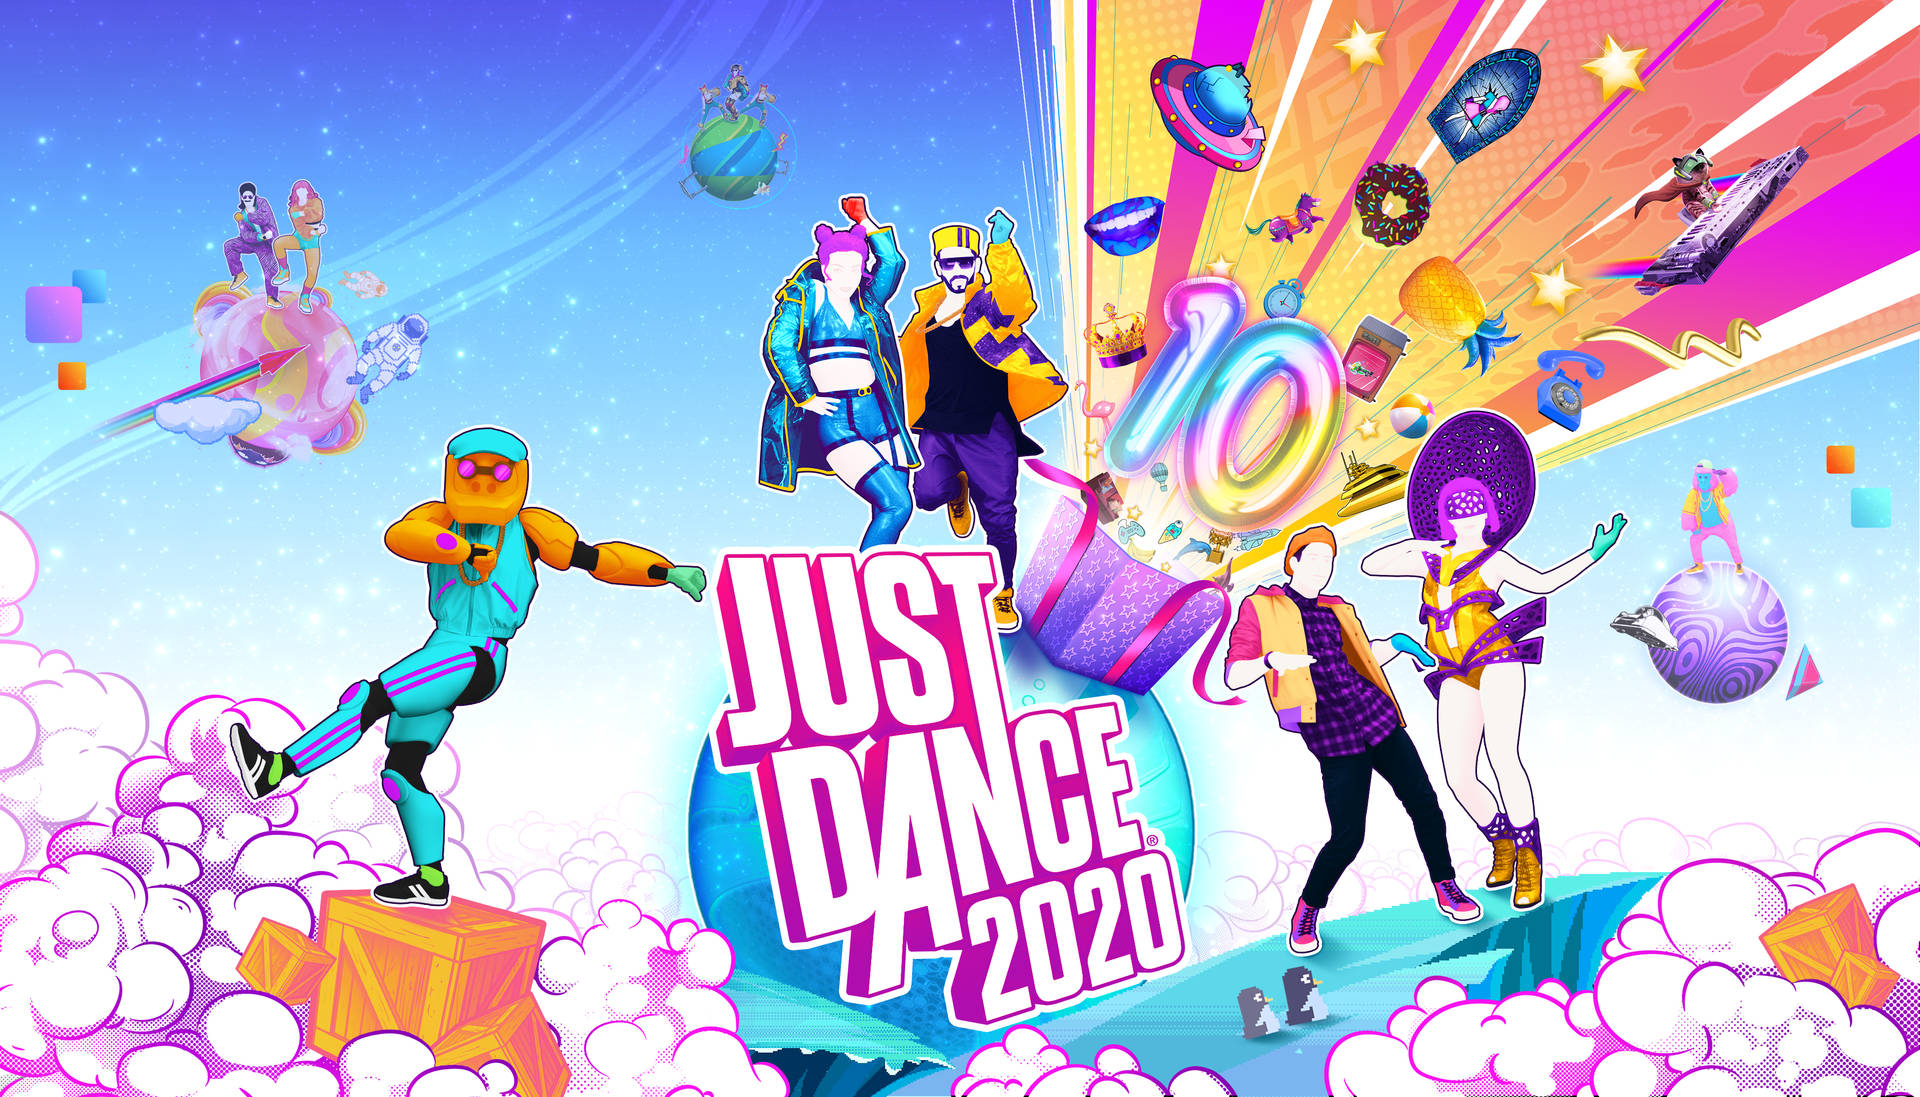 Justdance 2020 Plakat Wallpaper